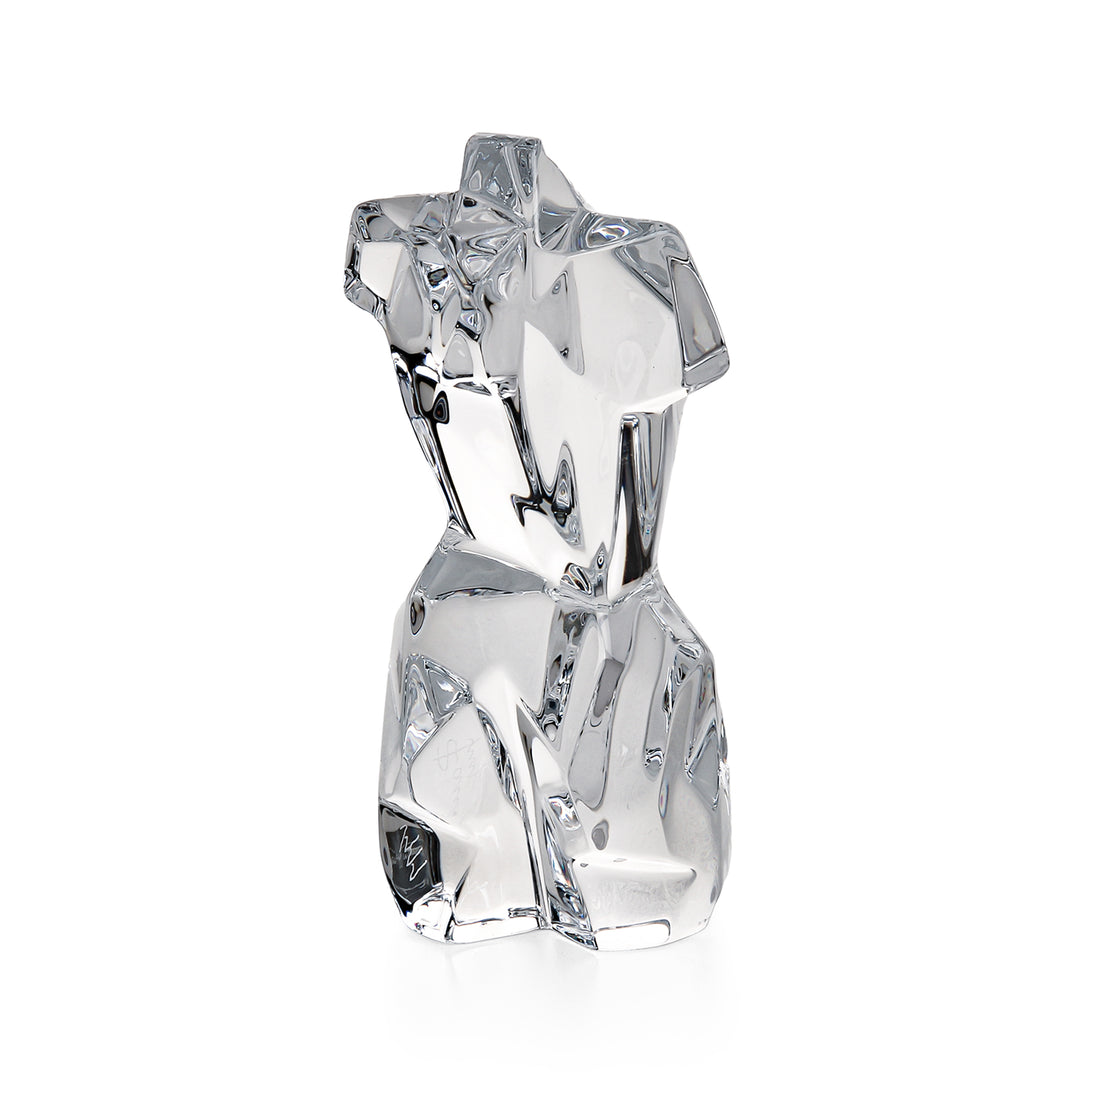 DAUM Crystal Athena Female Torso Figurine